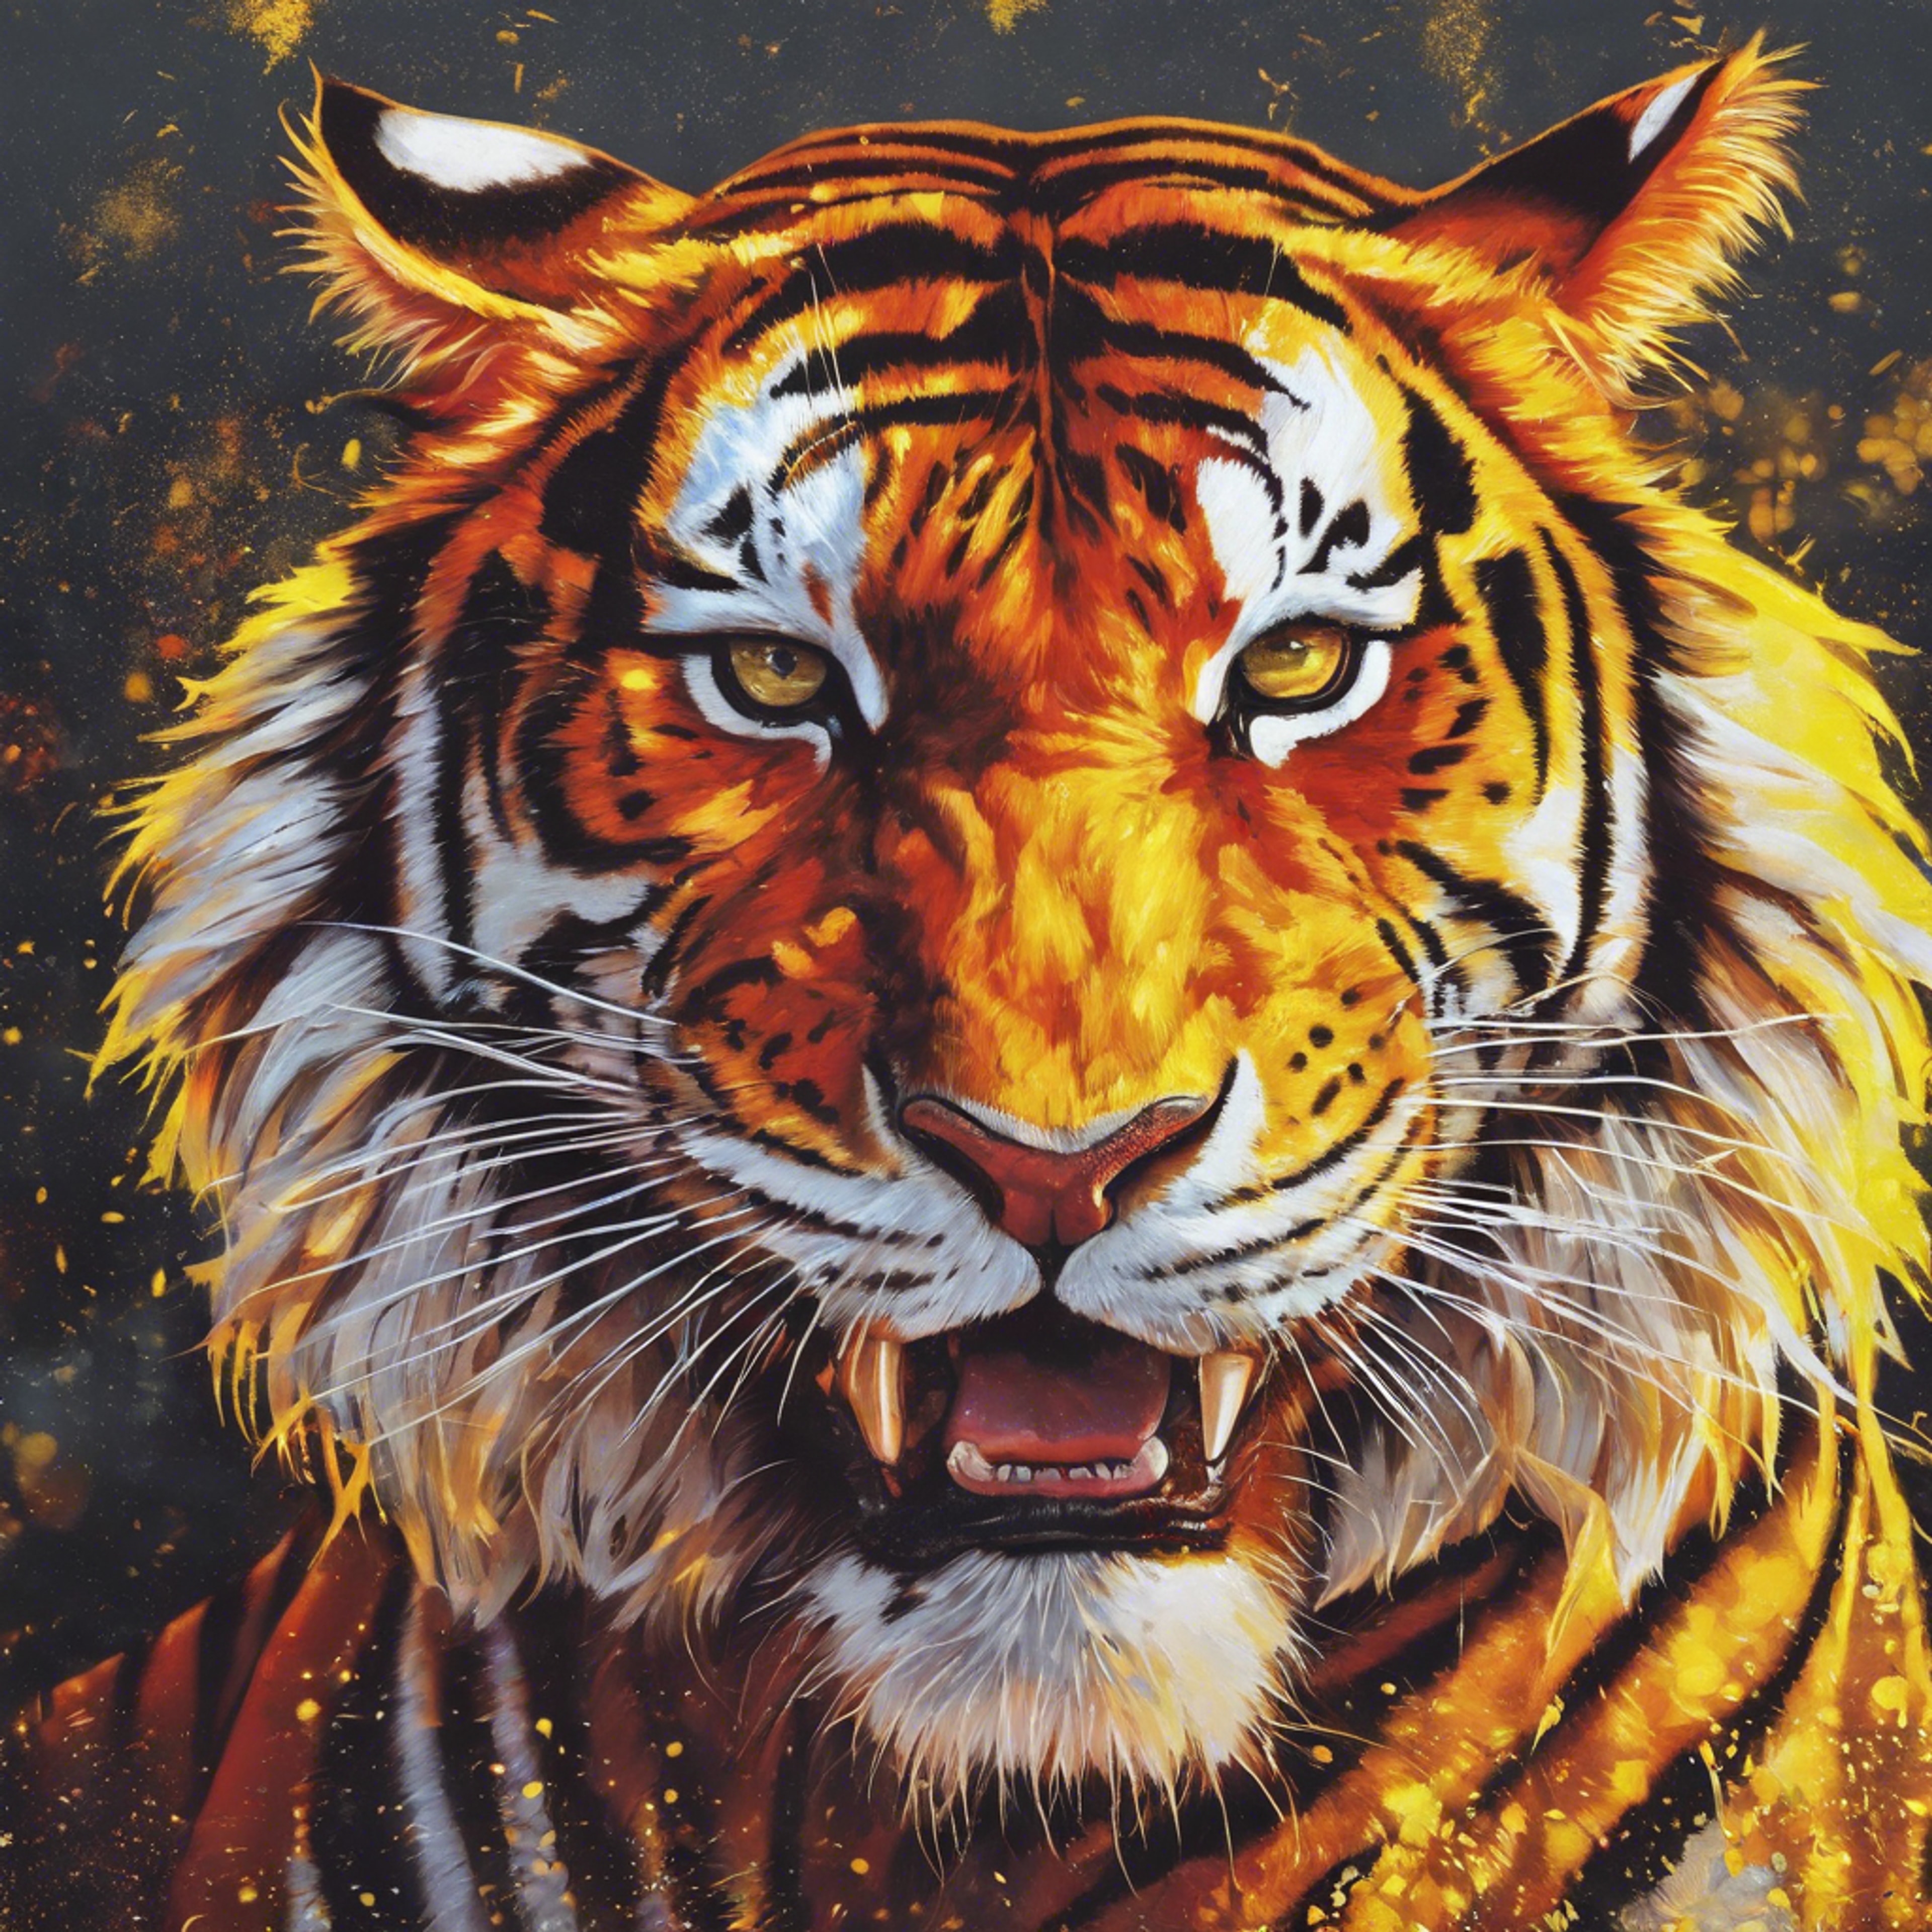 A mural featuring a cool red tiger roaring, under a bright yellow sun, symbolizing strength and energy. Fondo de pantalla[b92d4e06da1a4dd6b9b7]